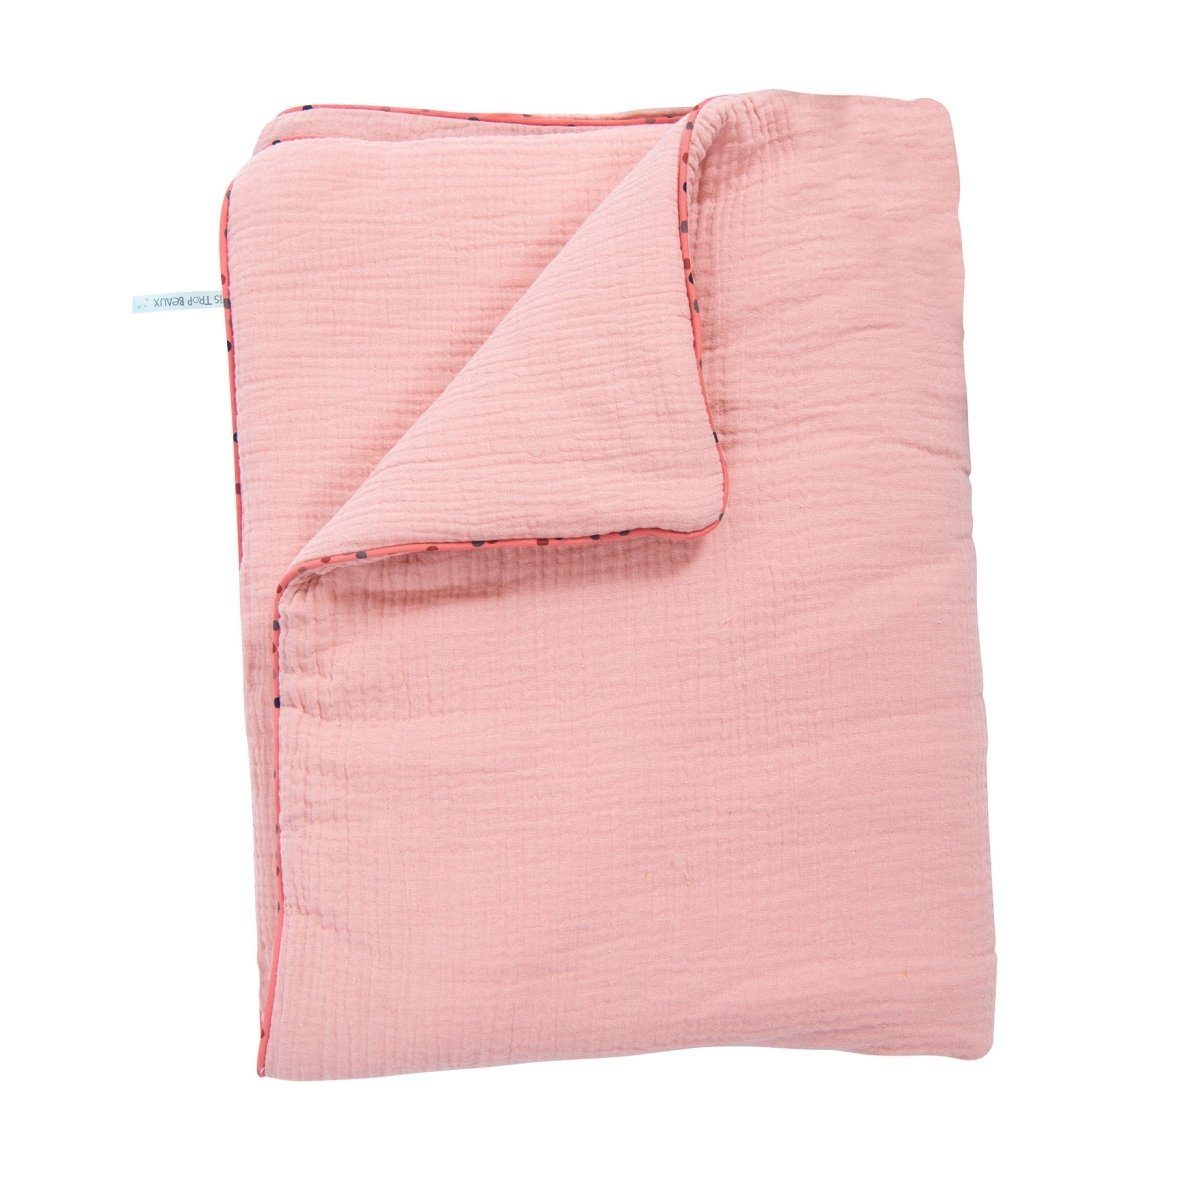 Bettüberwurf Bettüberwurf rosa 90x69cm Kinderdecke Bettdecke, Moulin Roty